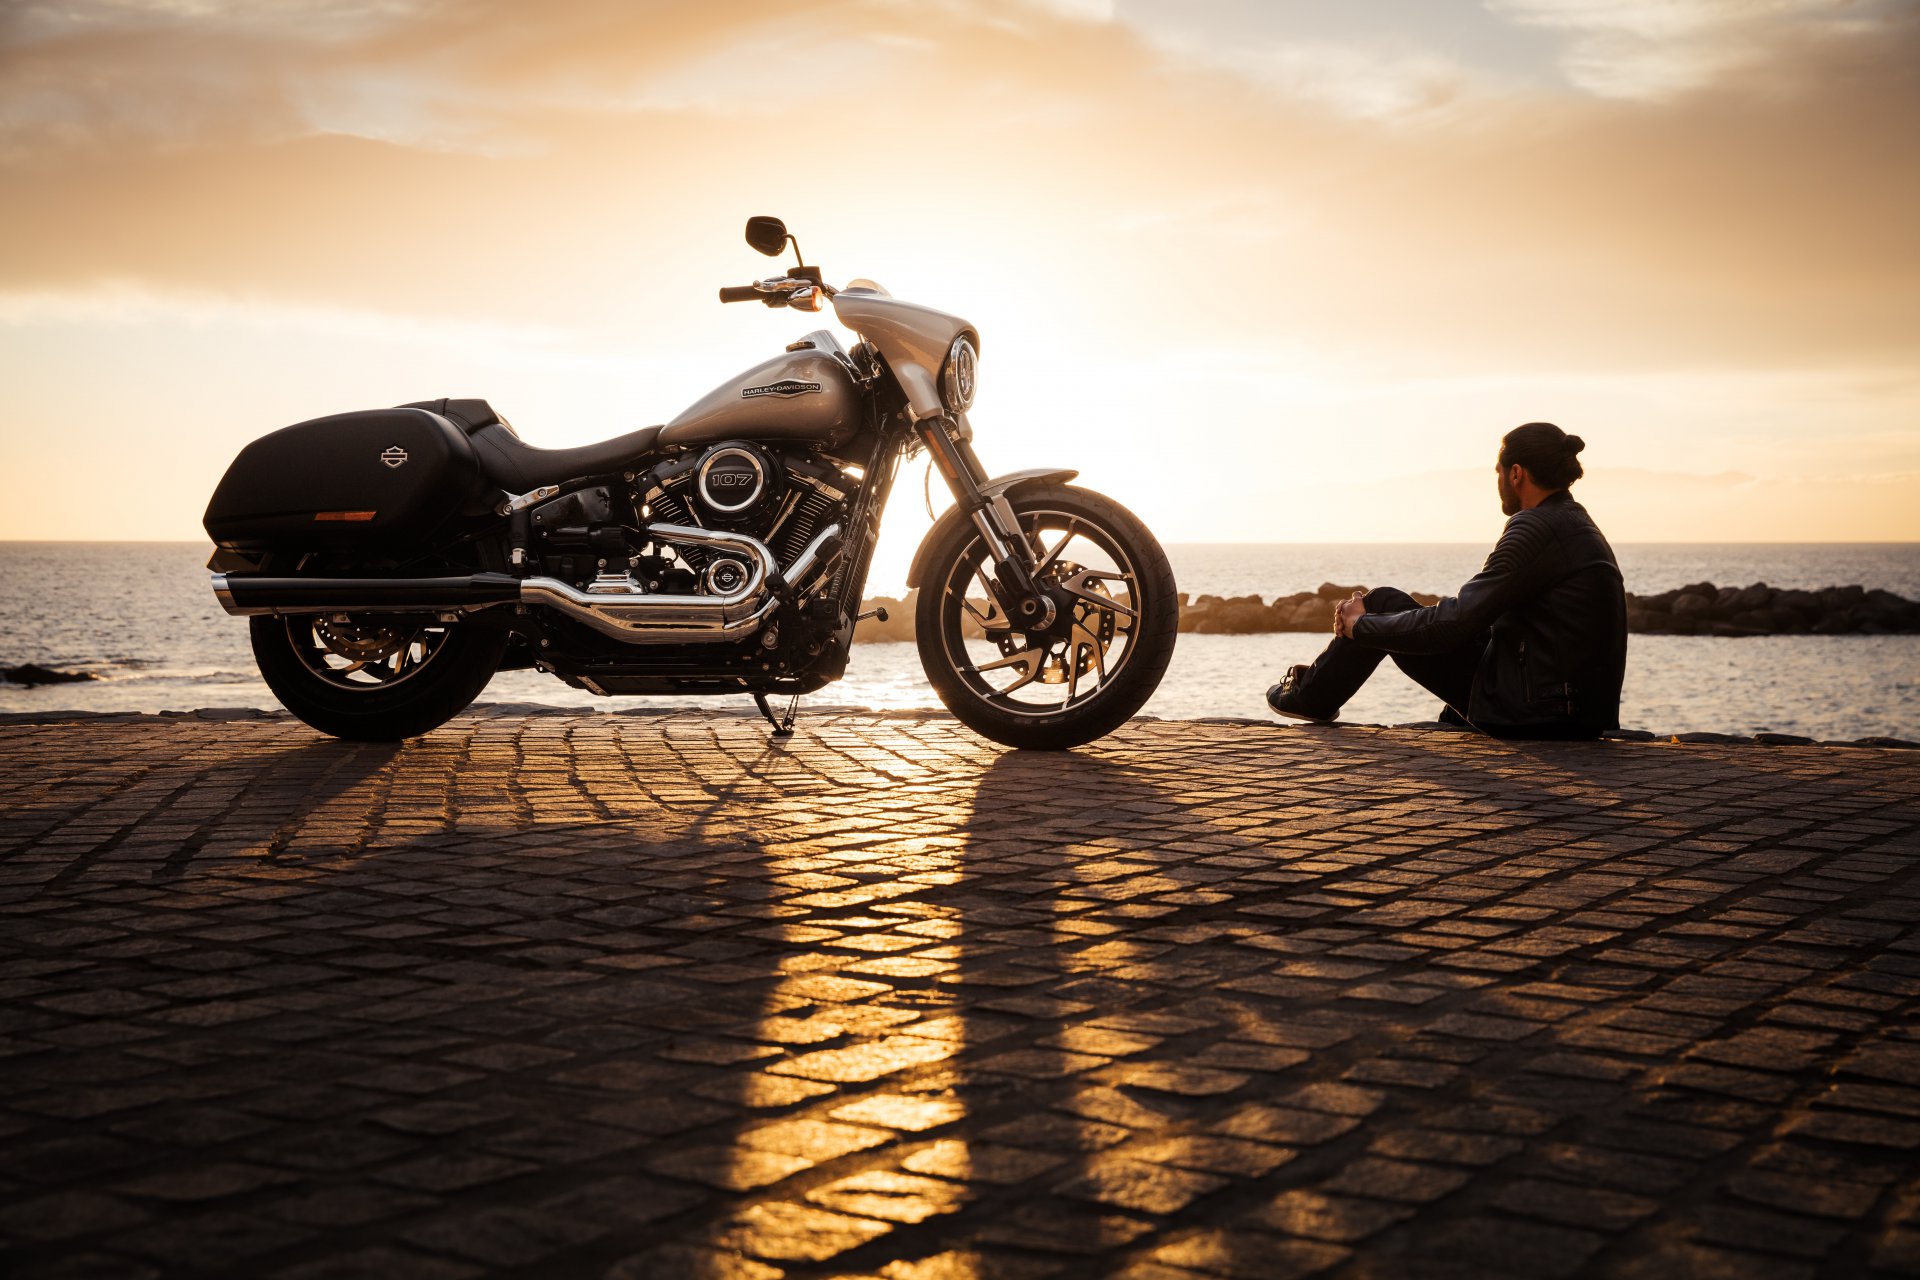 Photo by Harley-Davidson on Unsplash